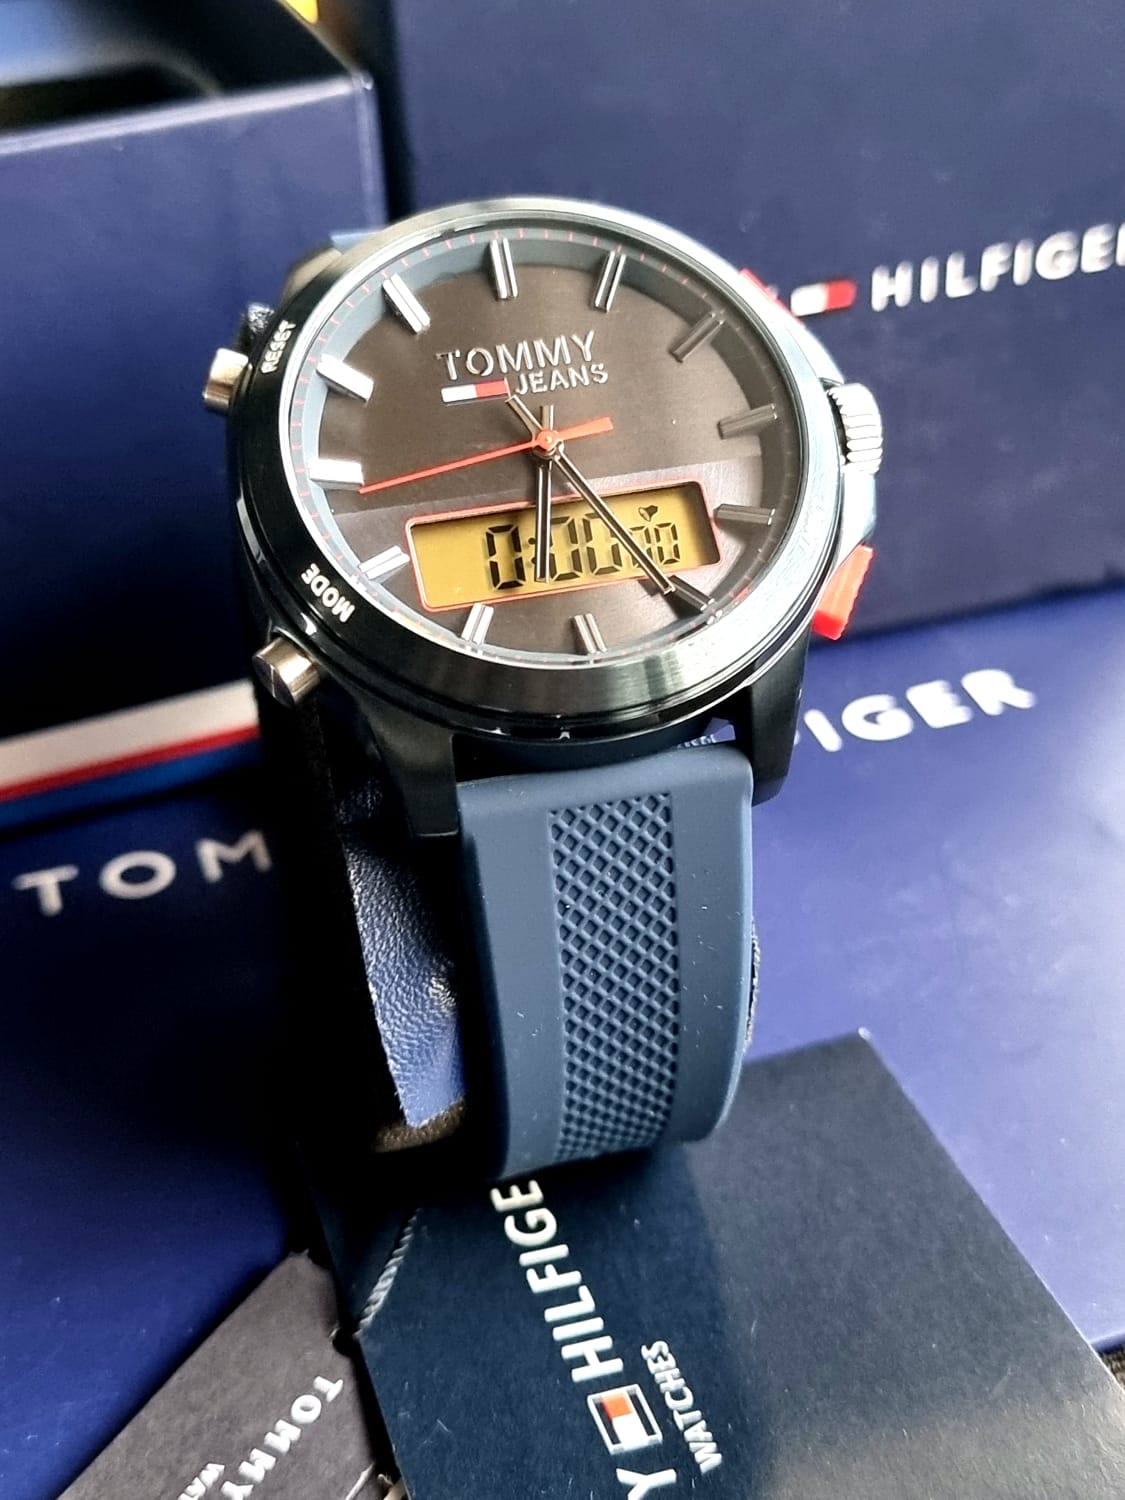 Tommy Hilfiger Men’s Quartz Silicone Strap Blue Dial 46mm Watch 1791761